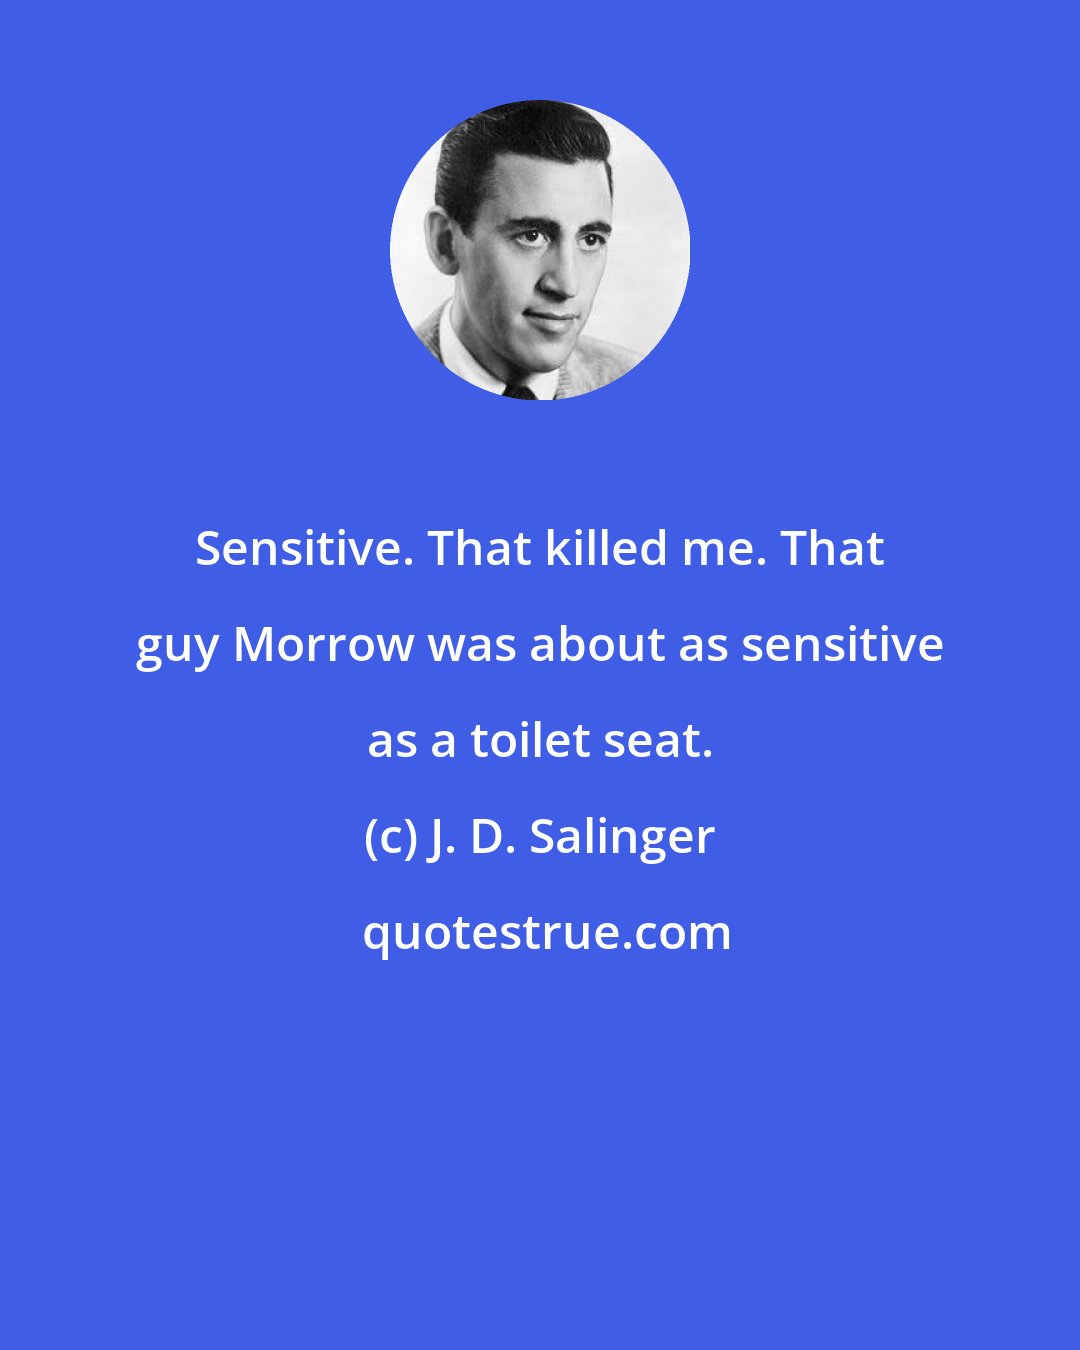 J. D. Salinger: Sensitive. That killed me. That guy Morrow was about as sensitive as a toilet seat.